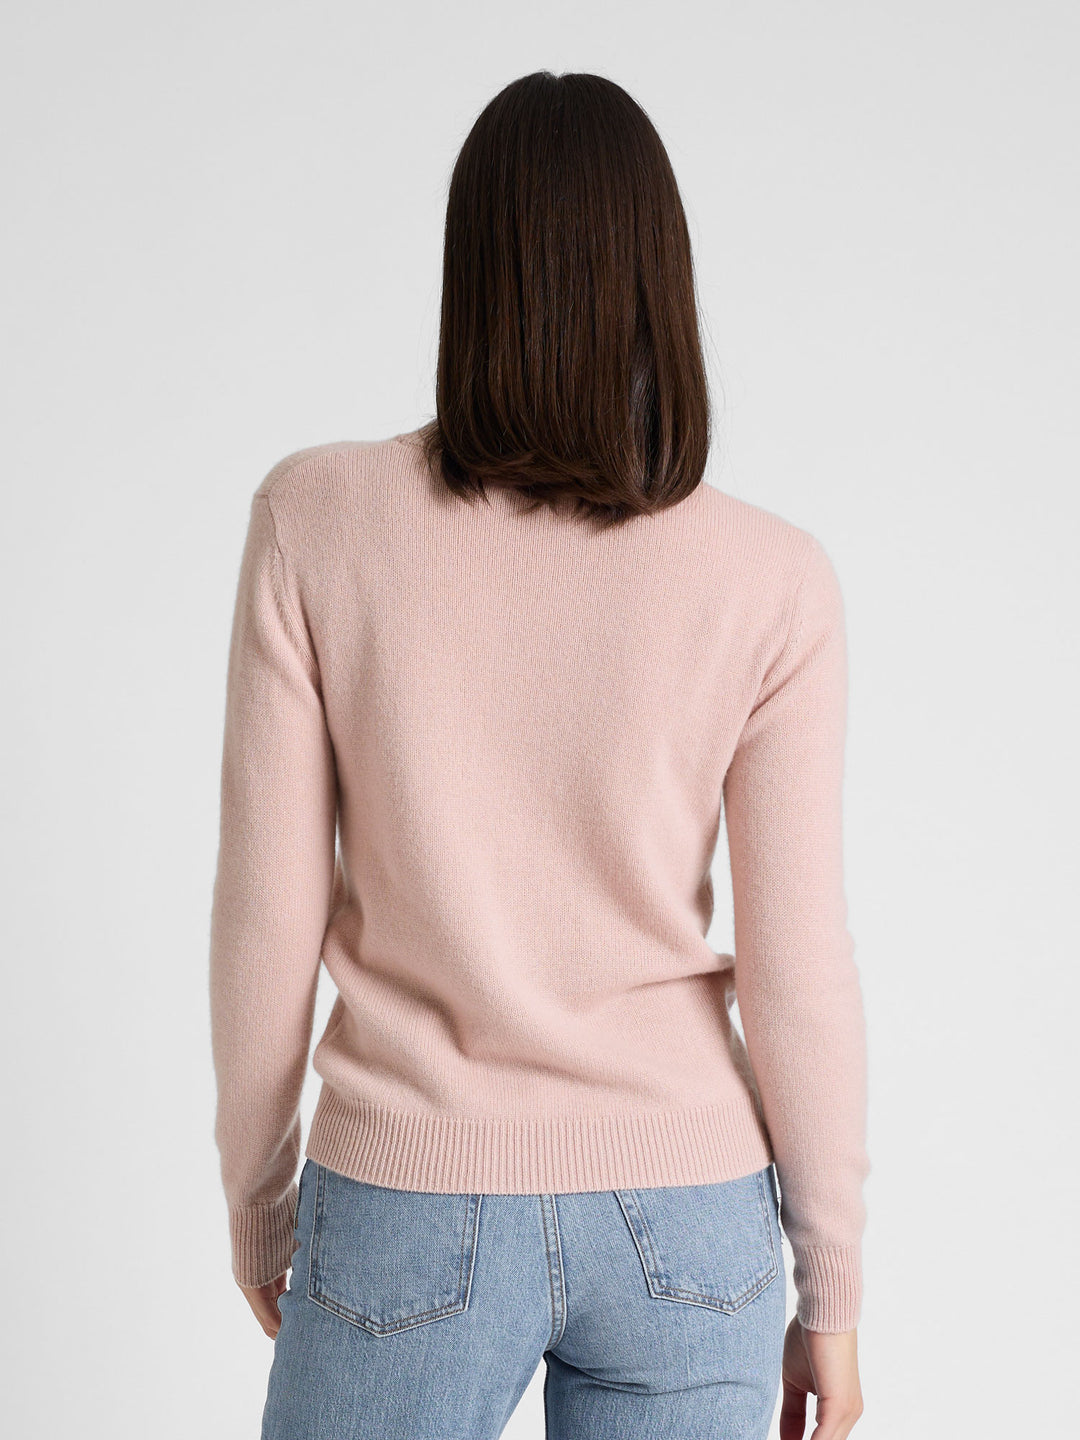 Cashmere round neck sweater Sofia Long beige 100% pure cashmere. Scandinavian design. Color: rose glow